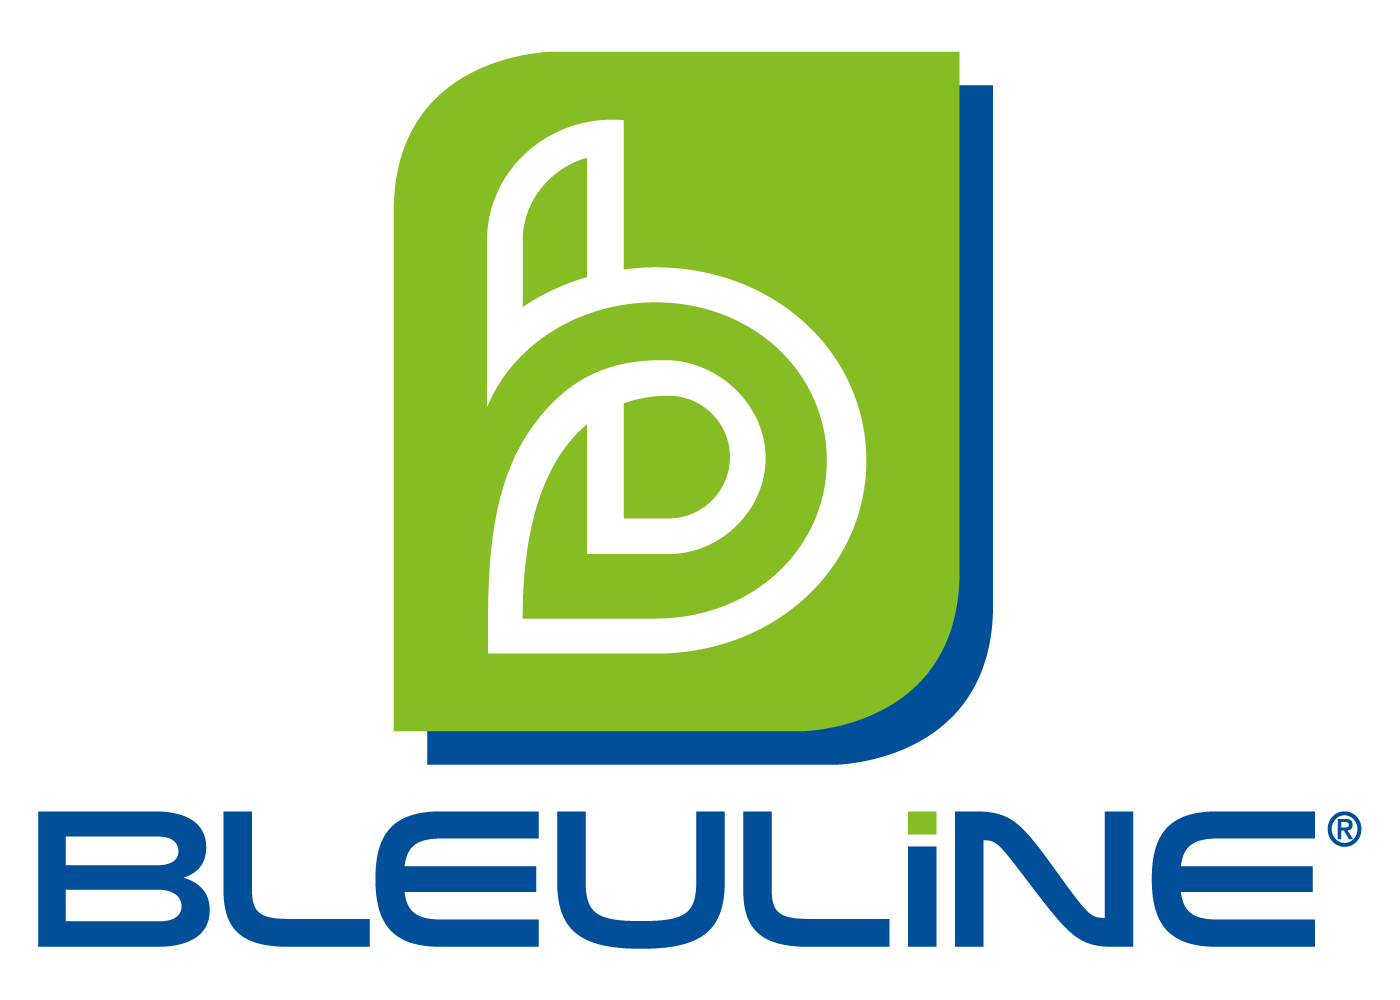 Bleuline